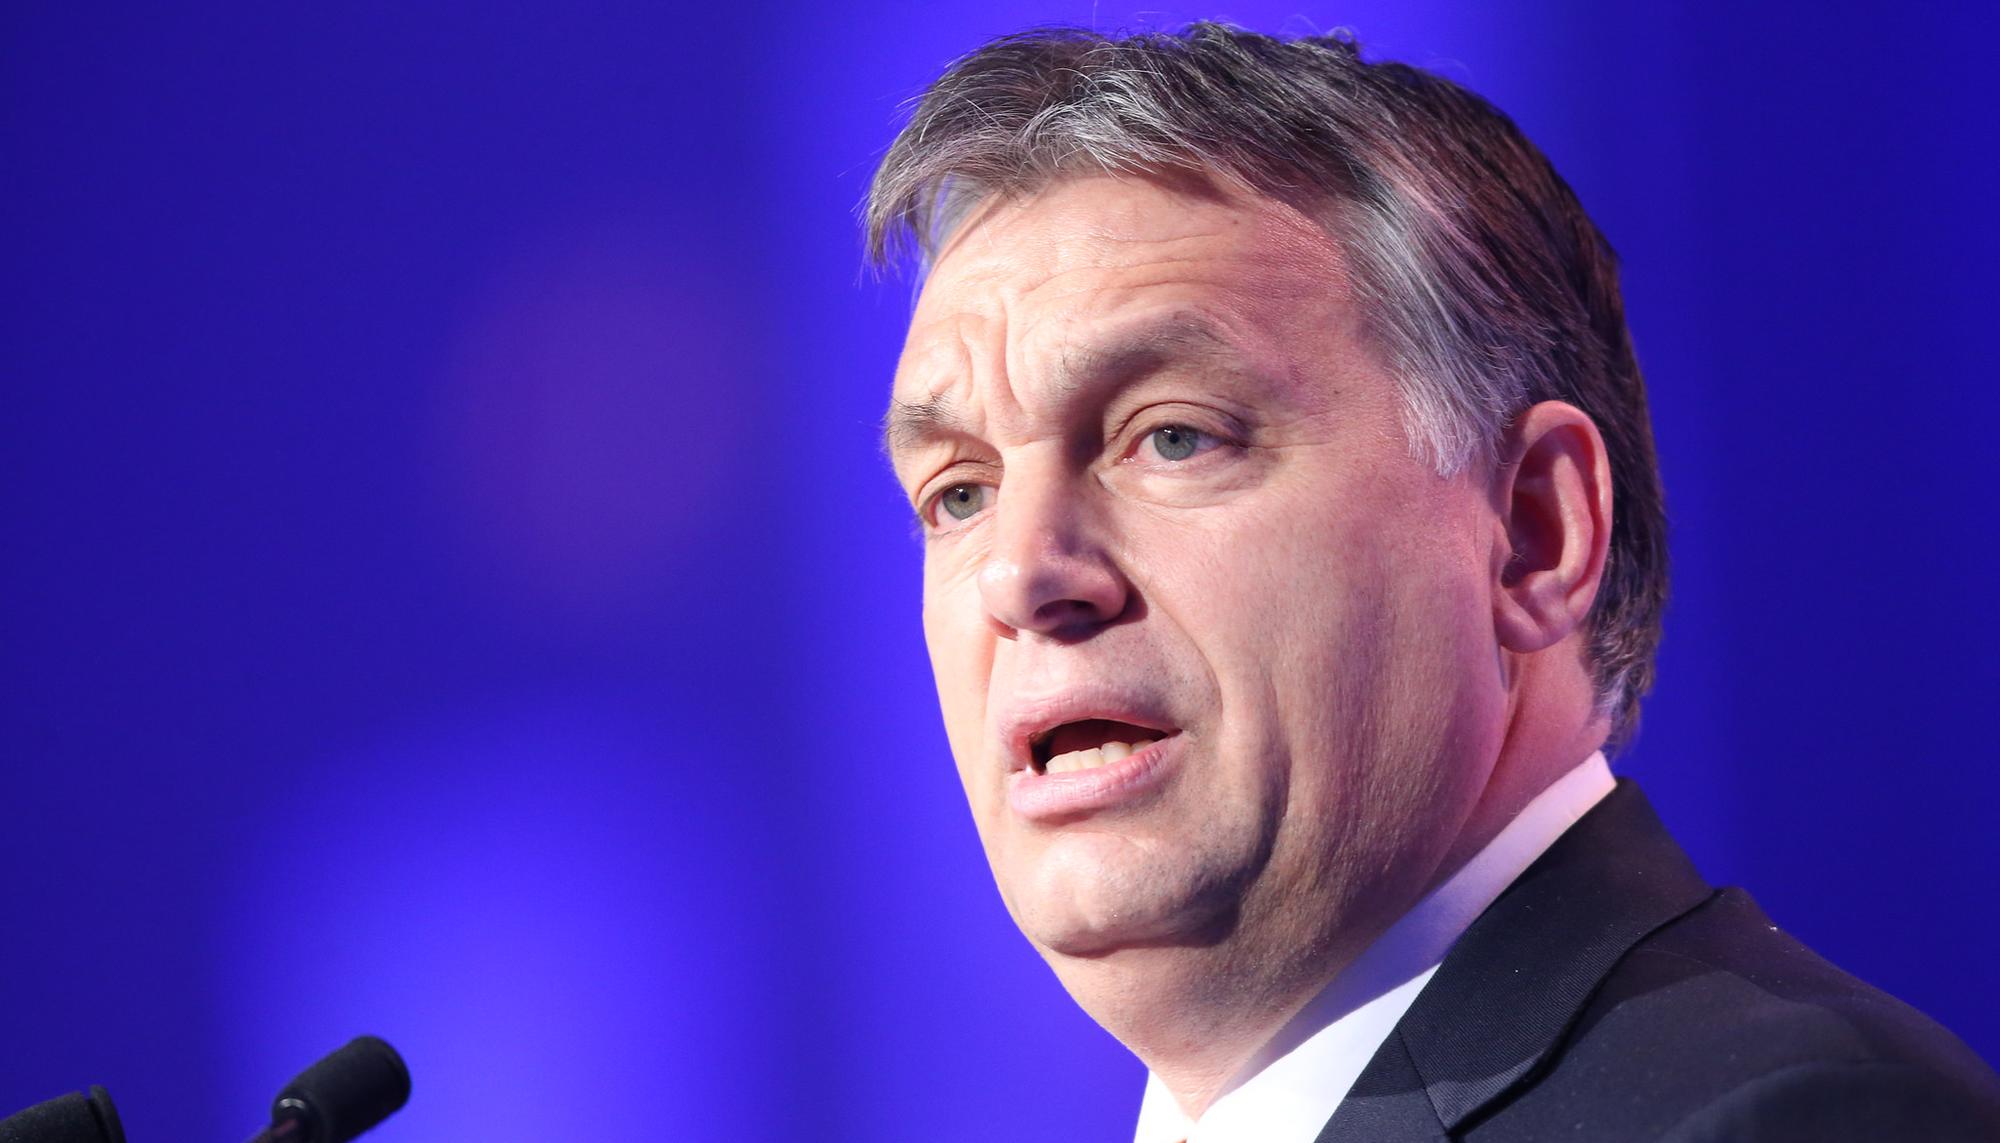 Viktor Orbán, primer ministro de Hungría